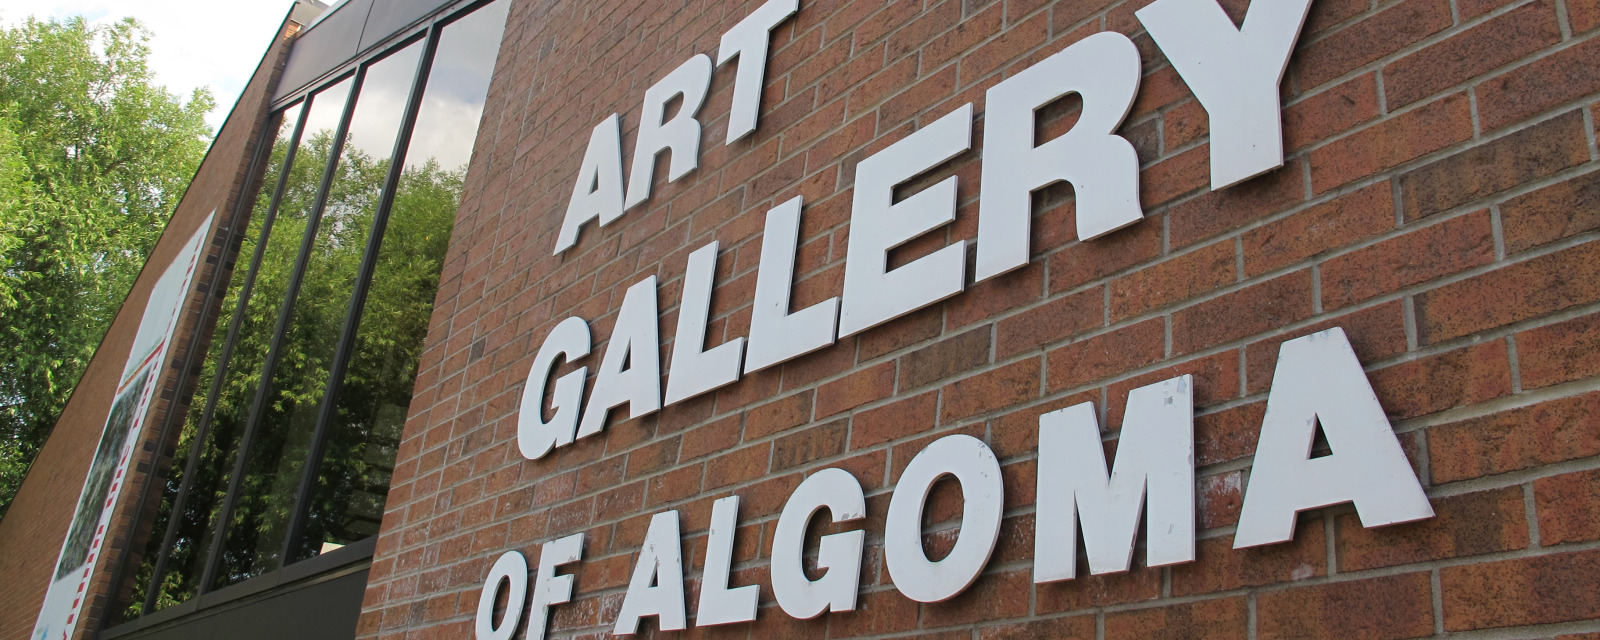 Summer Art Camp - Exploring Algoma at the Art Gallery of Algoma